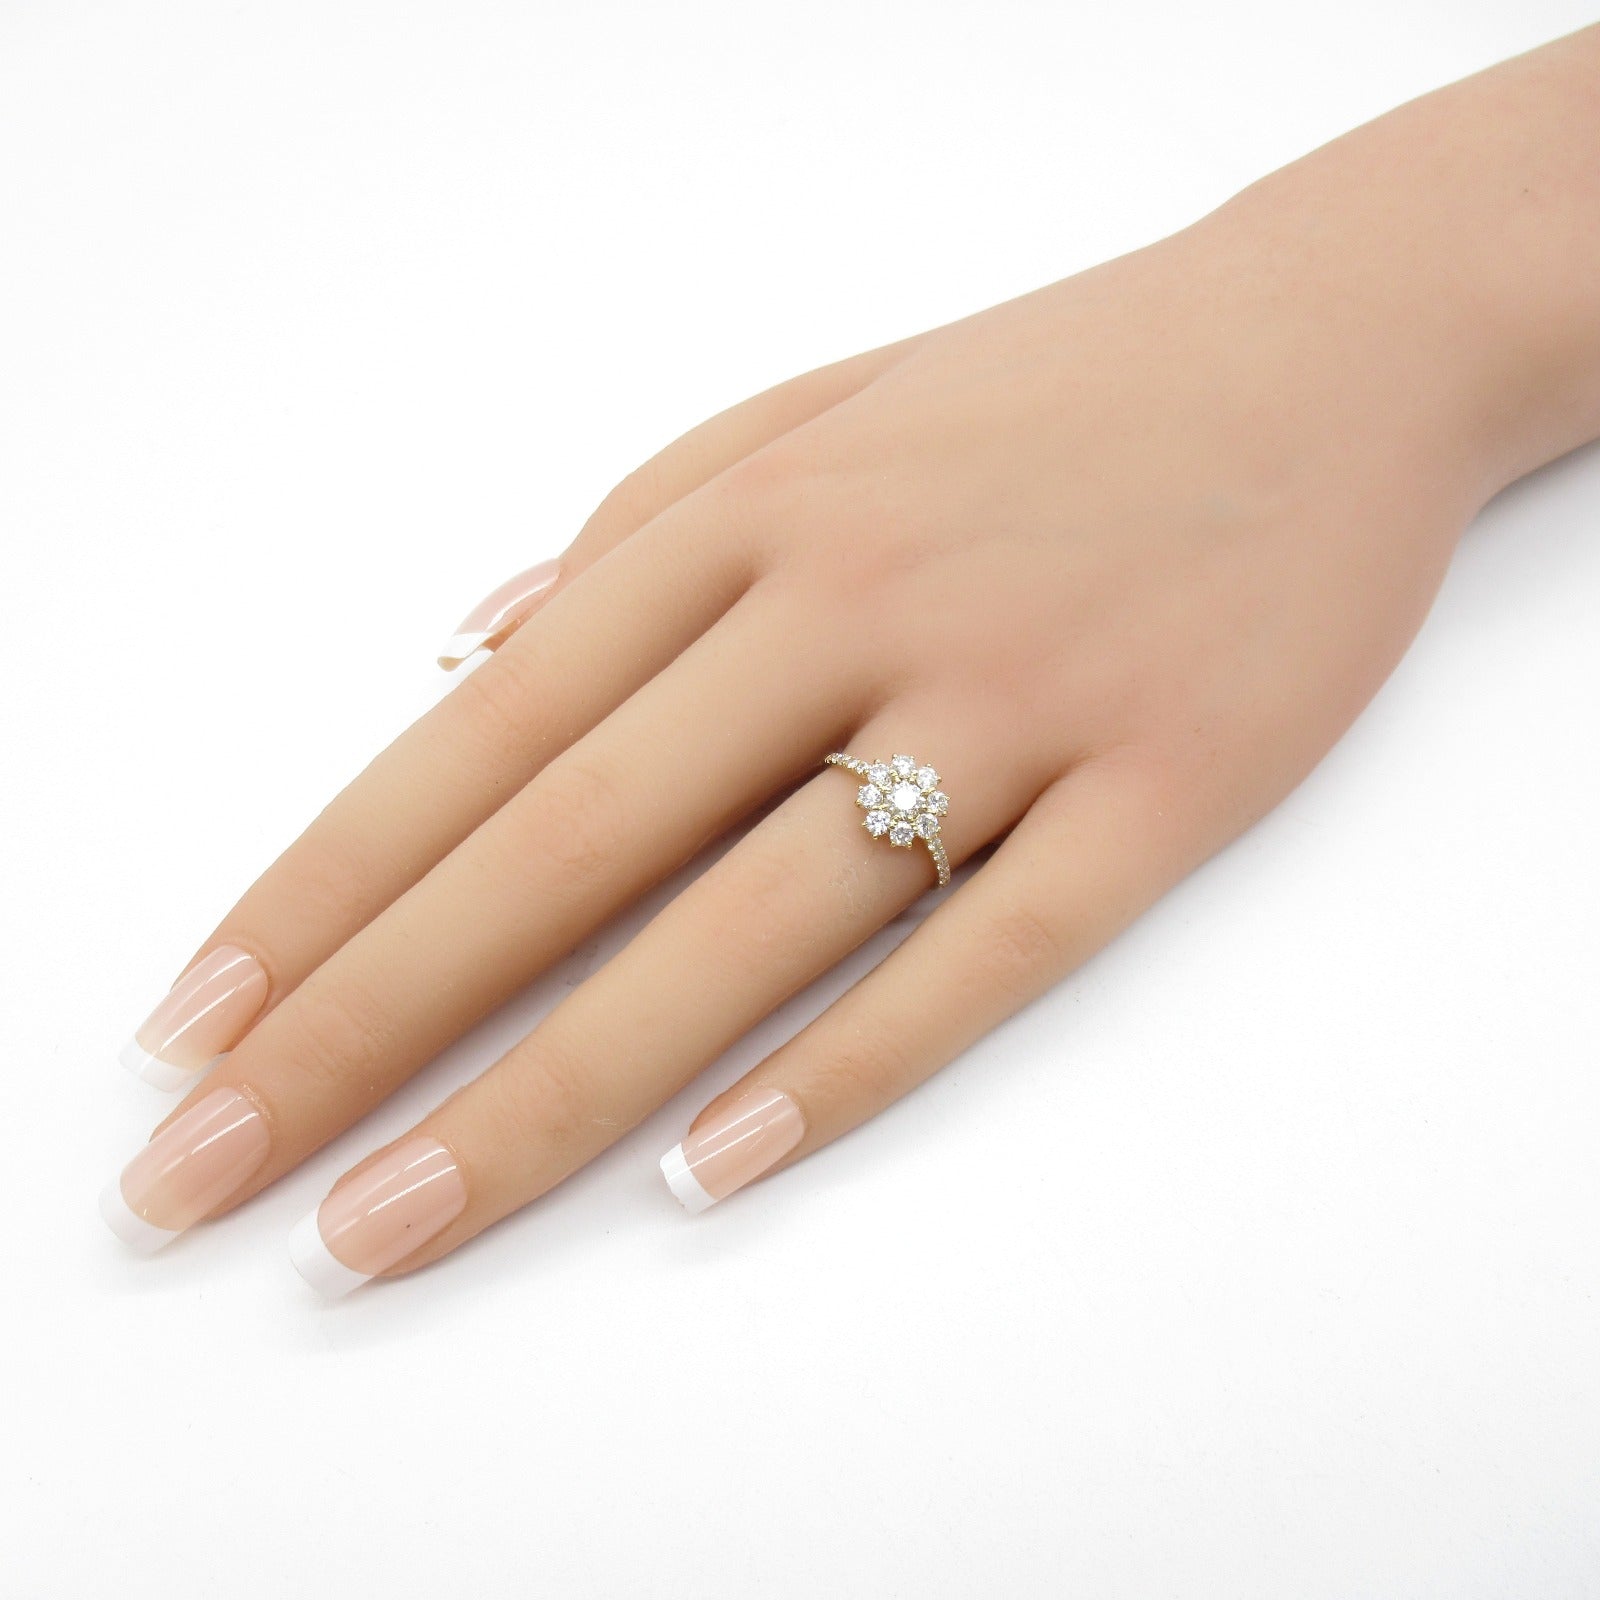 Jewelry Jewelry Diamond Ring Ring Ring Jewelry K18 (Yellow G) Diamond  Clear Diamond 2.2g